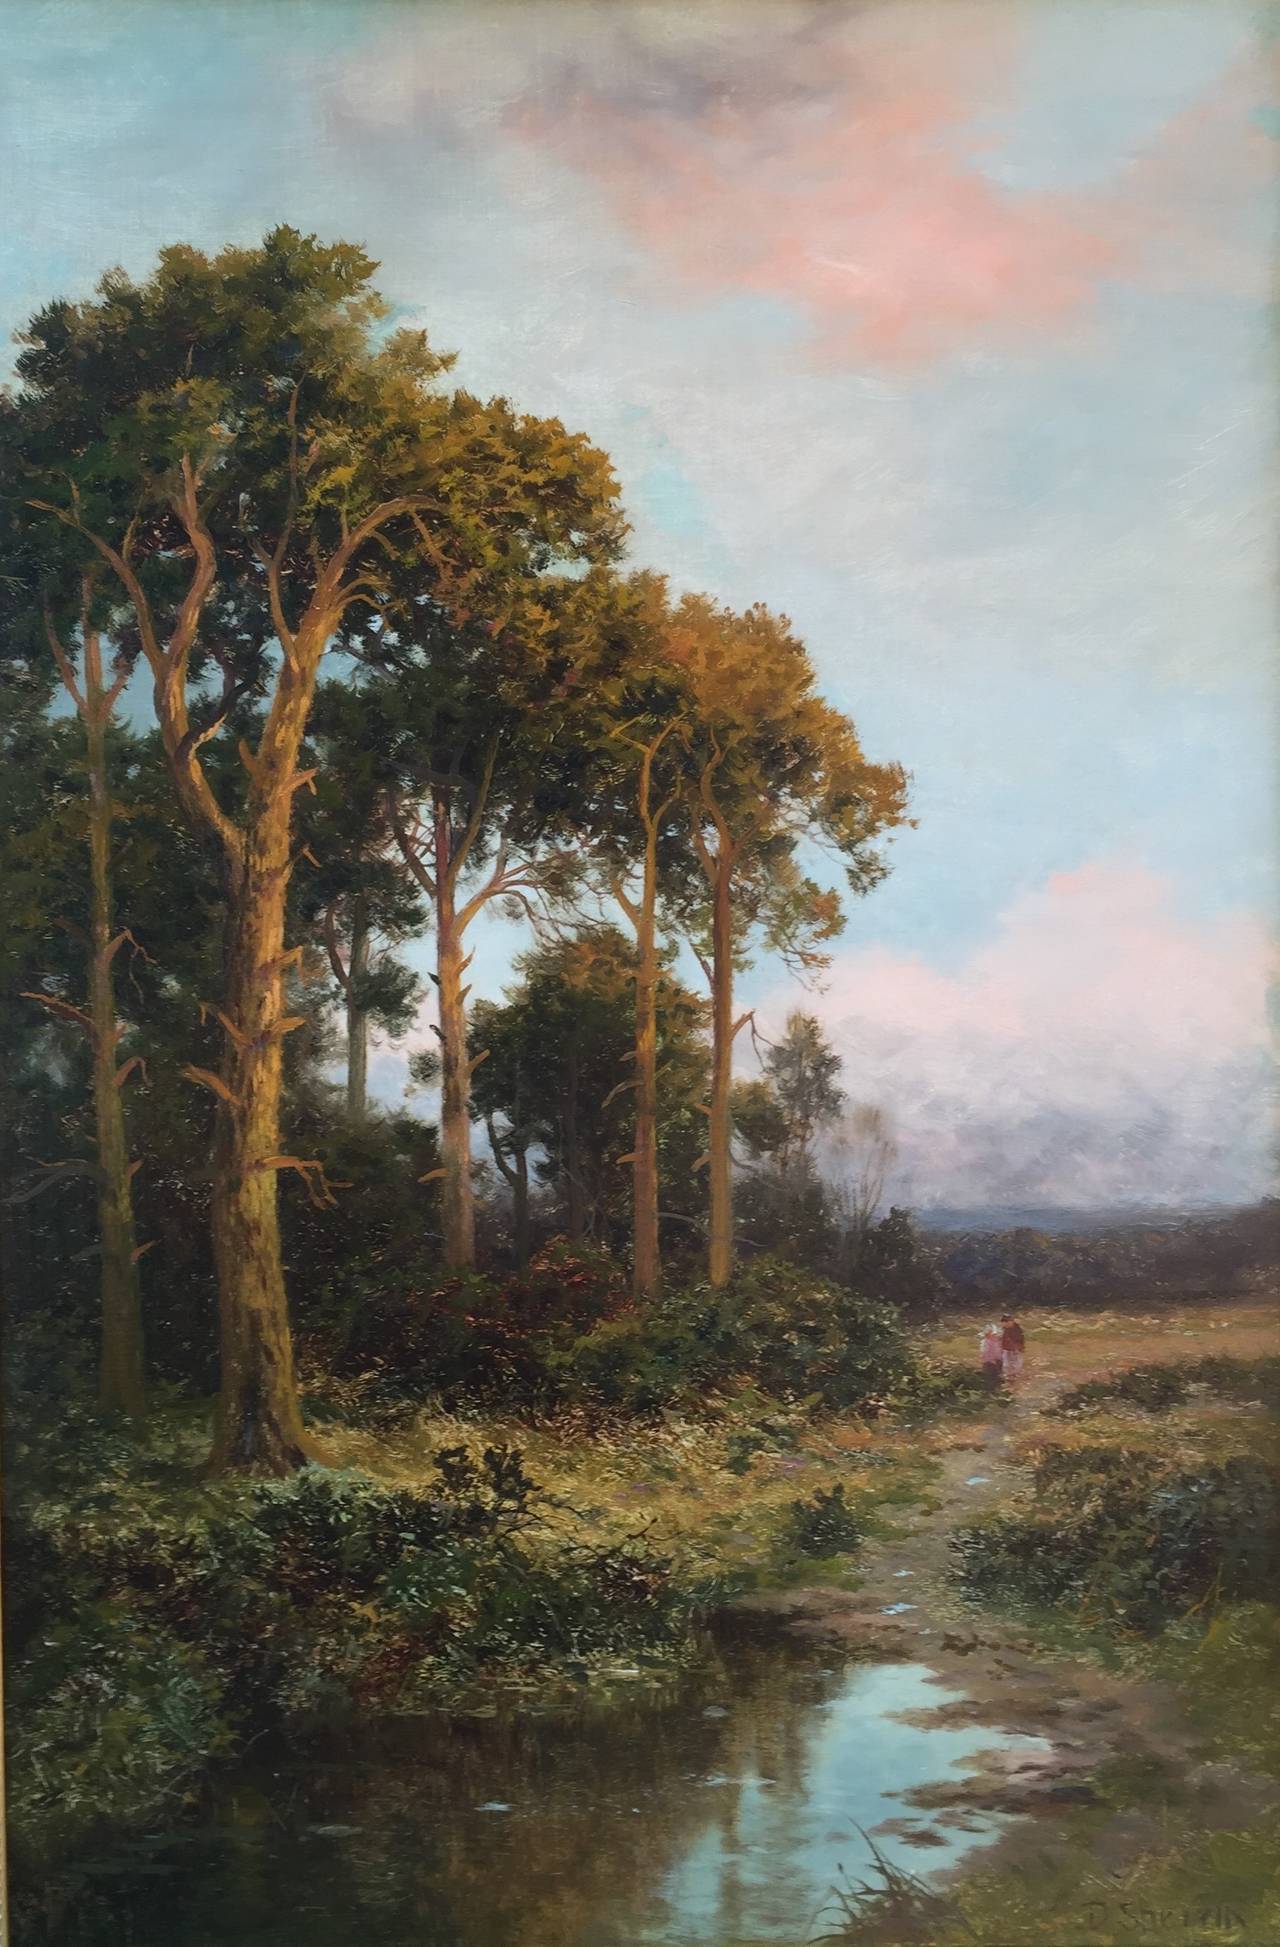 Daniel Sherrin Landscape Painting - "The Evening Stroll"